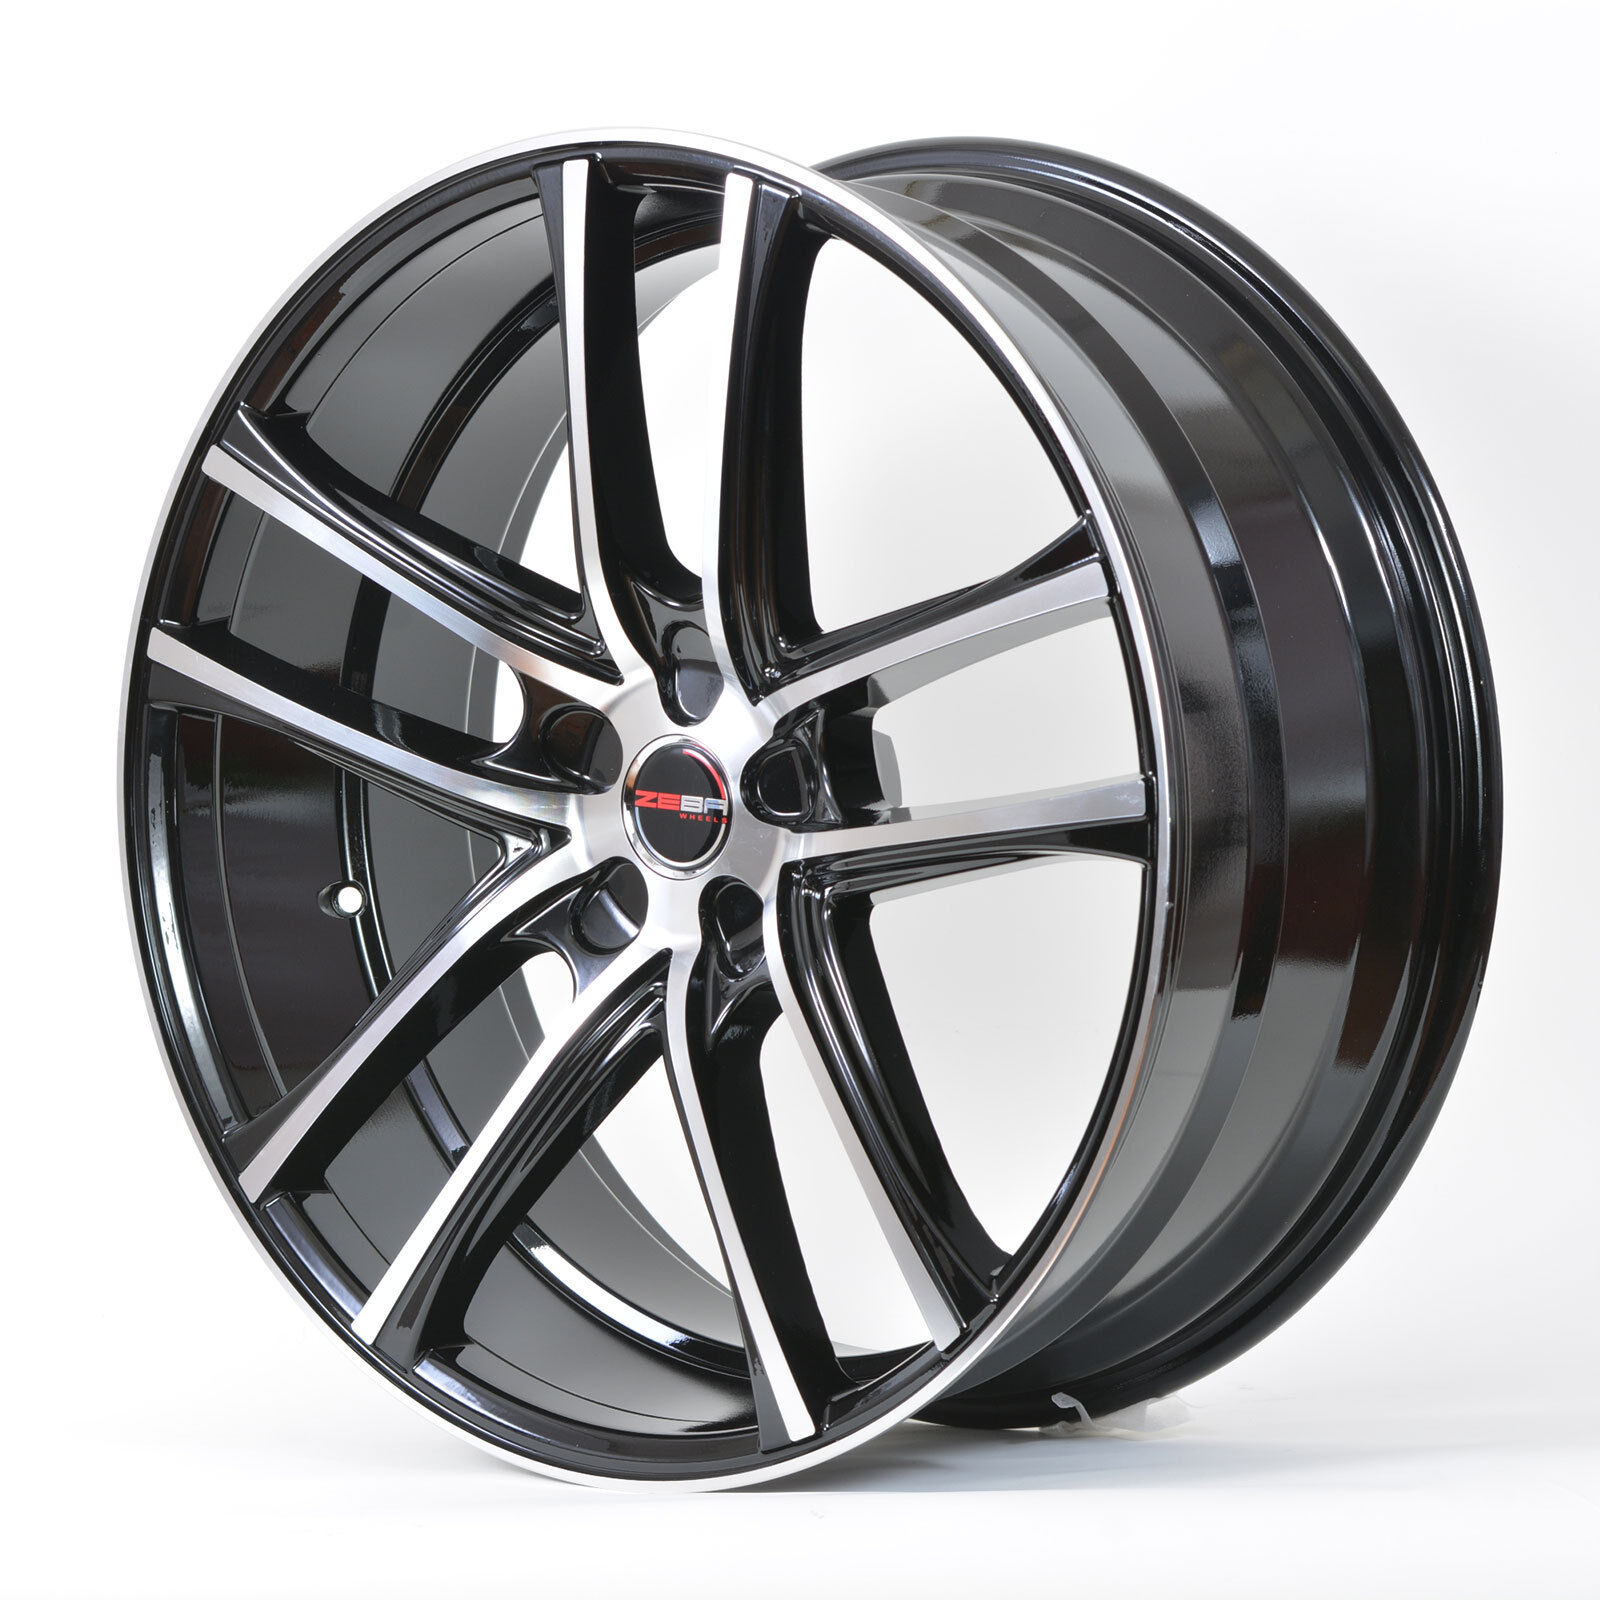 4 GWG Wheels 18 inch Black Machined ZERO Rims fits 5x108 FORD FUSION 2013 - 2016